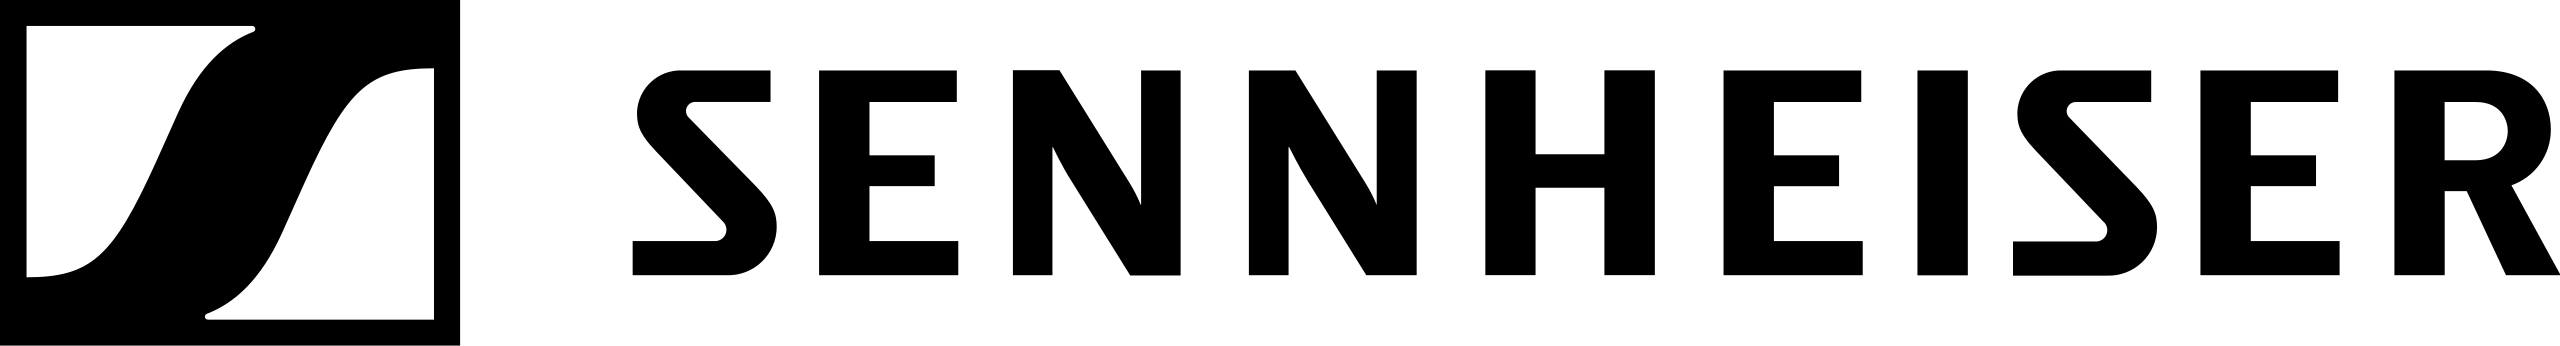 Sennheiser_logo_(2019).svg